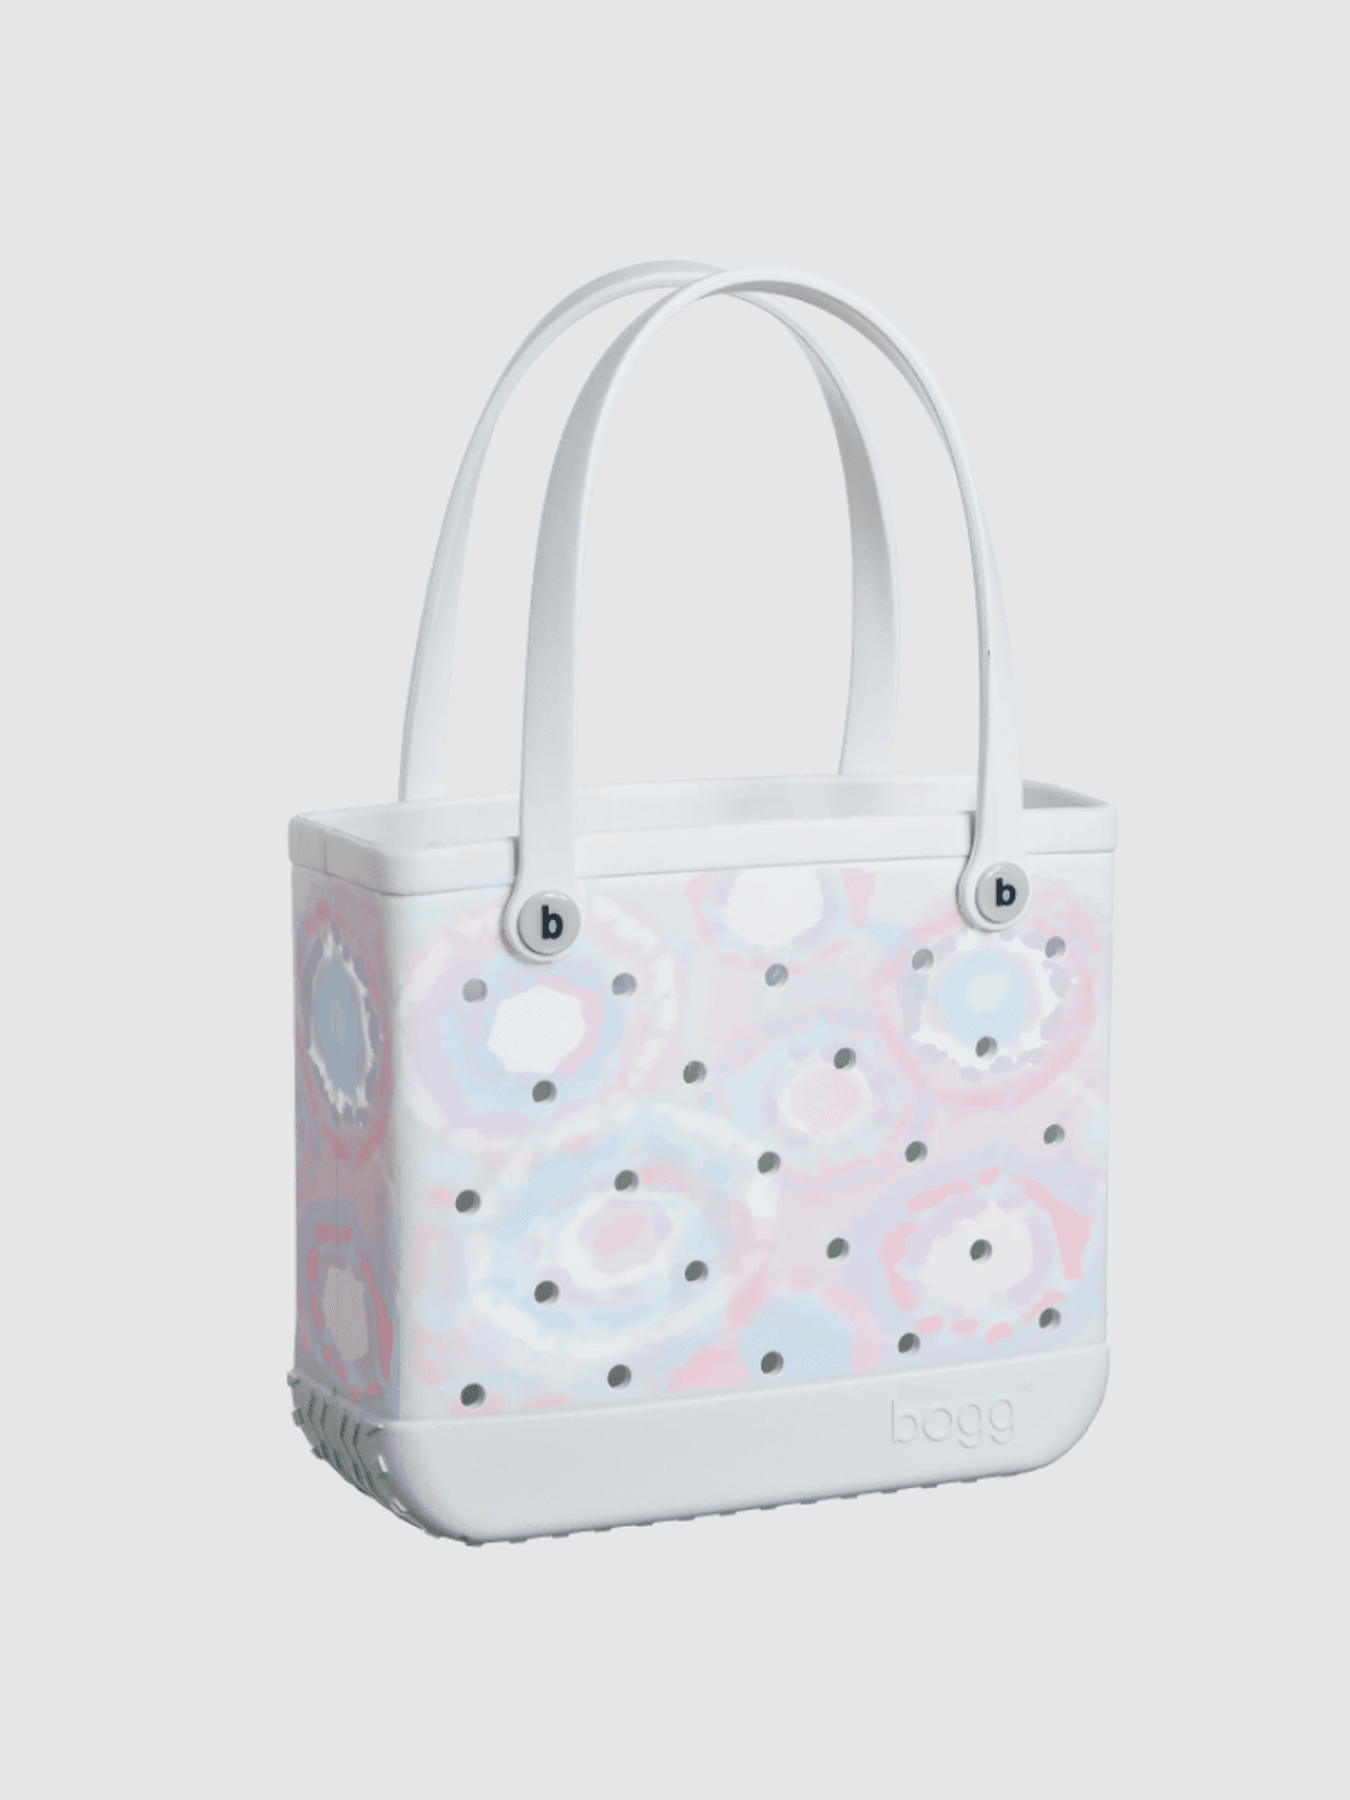 Special Edition Baby Bogg® Bag – BOGG BAG